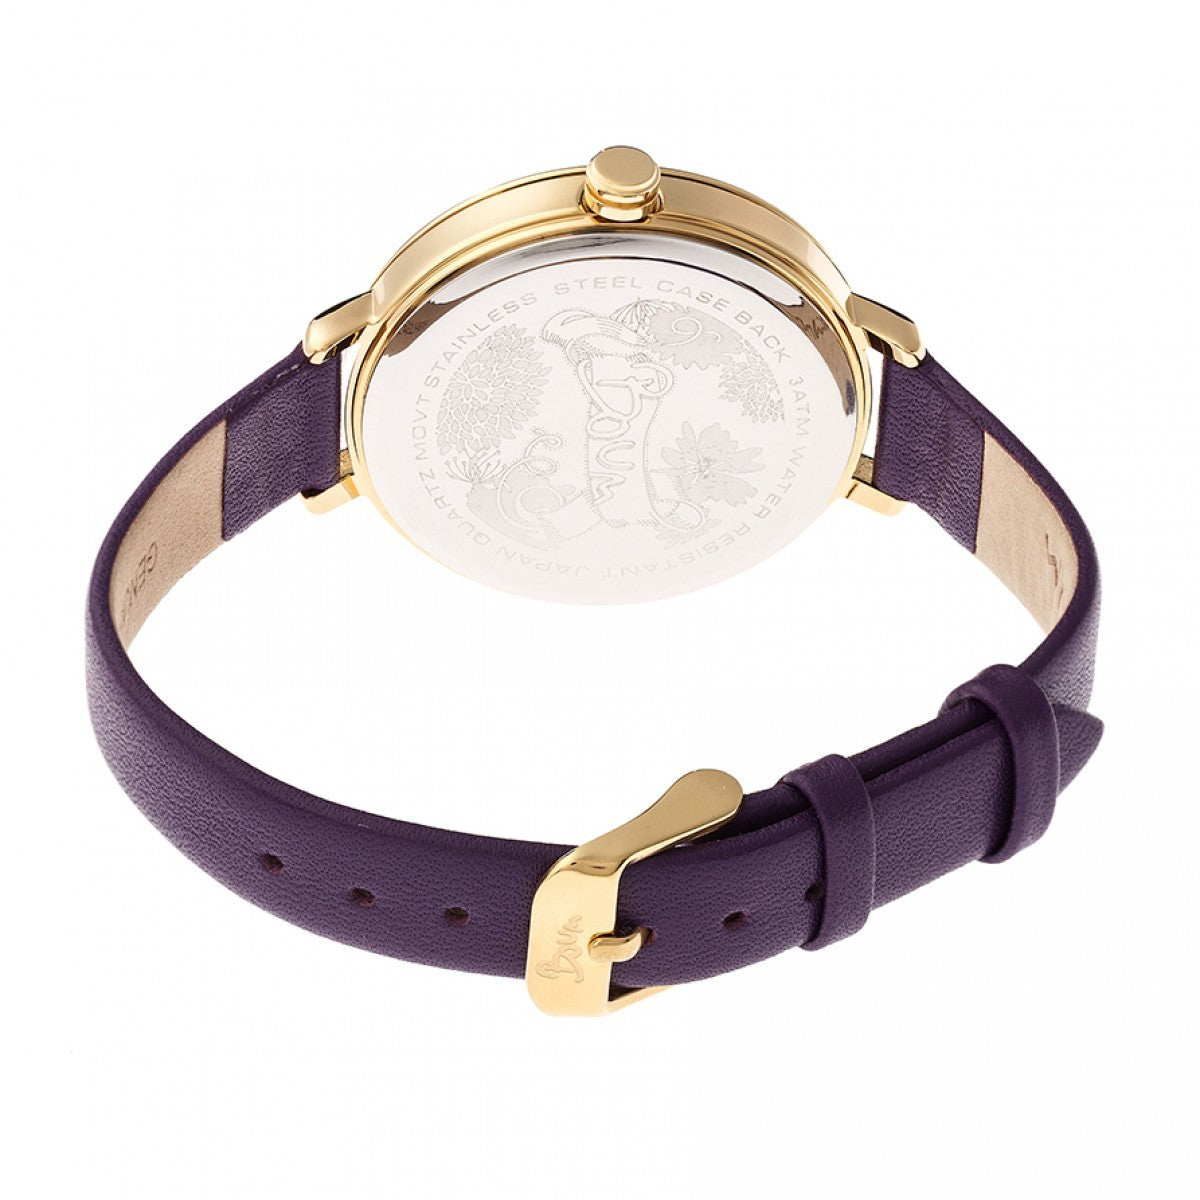 Boum Perle Leather-Band Watch - Gold/Purple - BOUBM5102